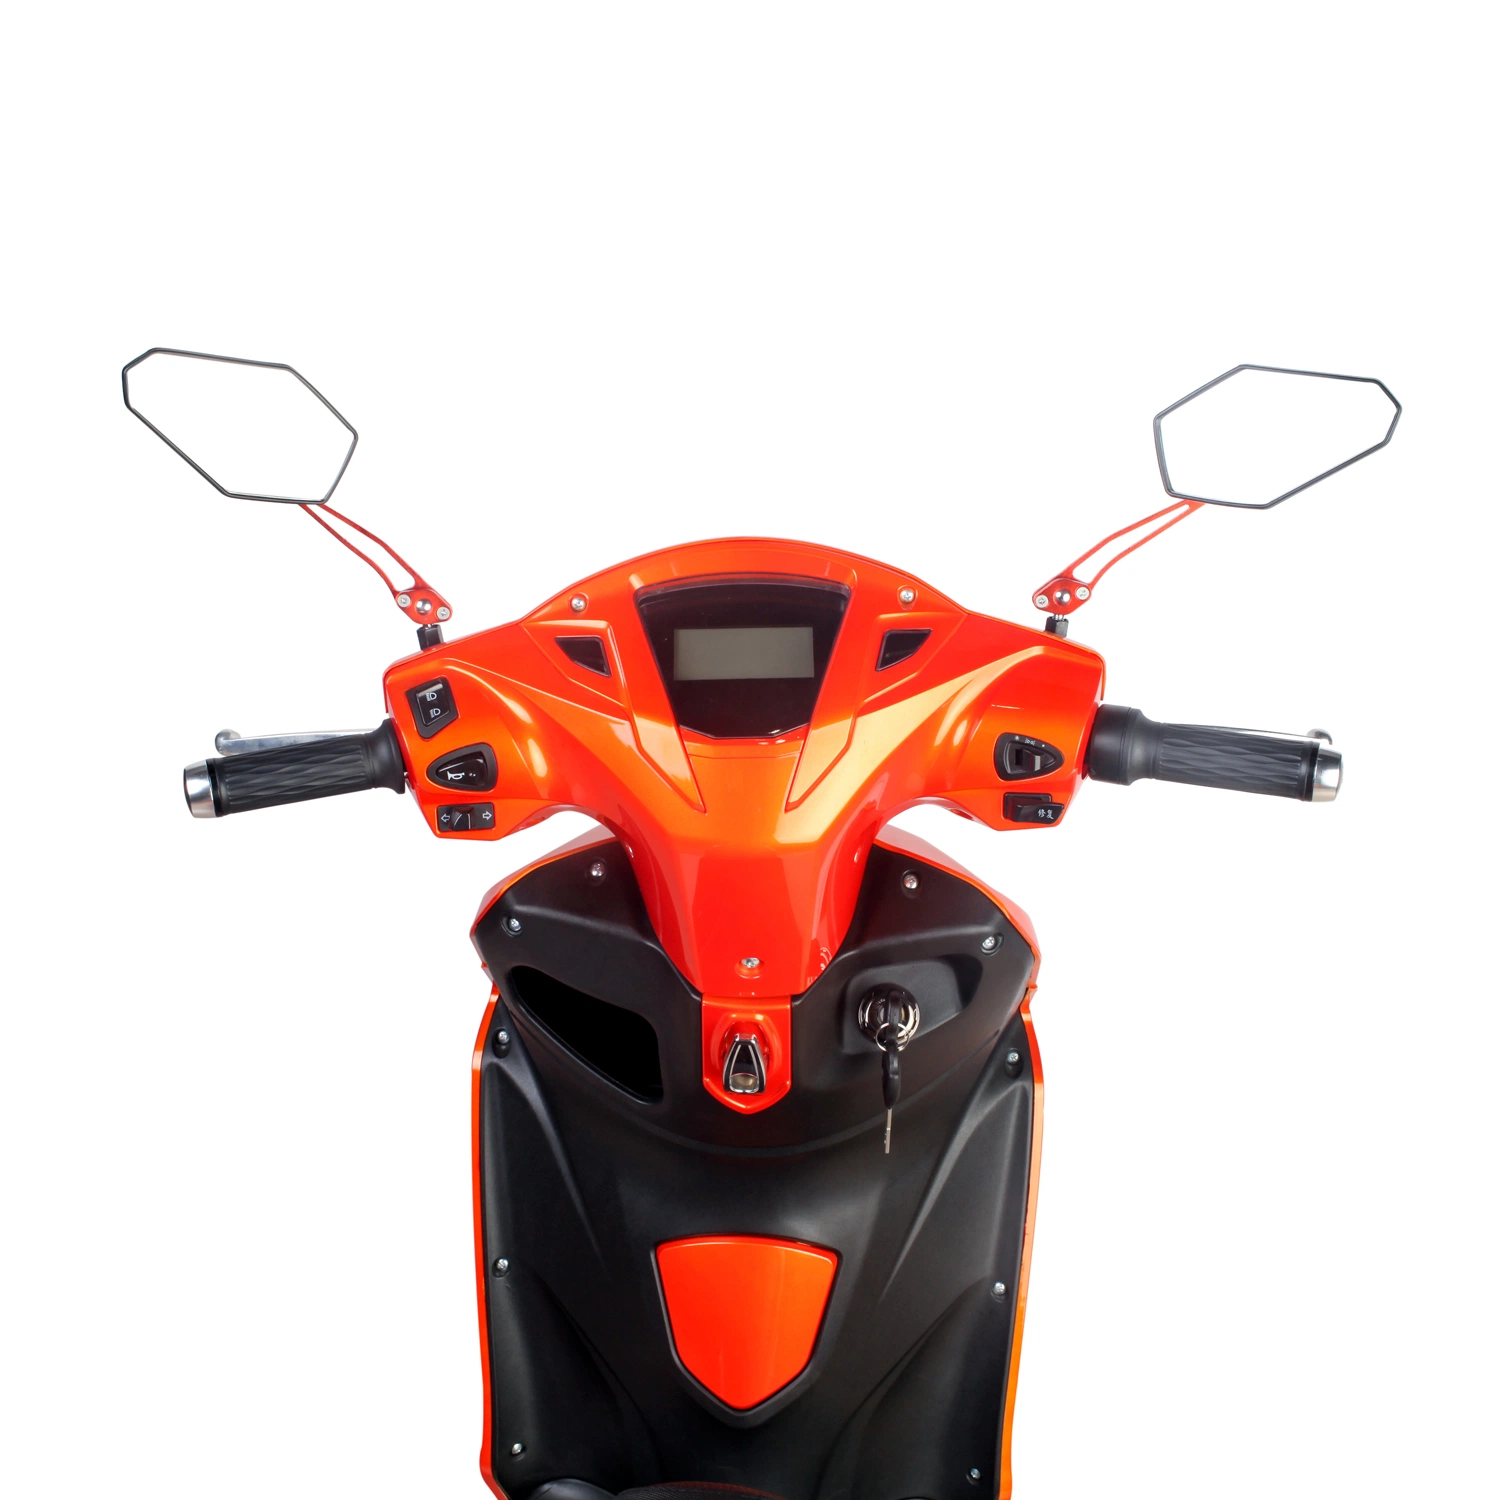 2000W potente moto / scooter eléctrico eléctrico / bicicleta eléctrica (TY)